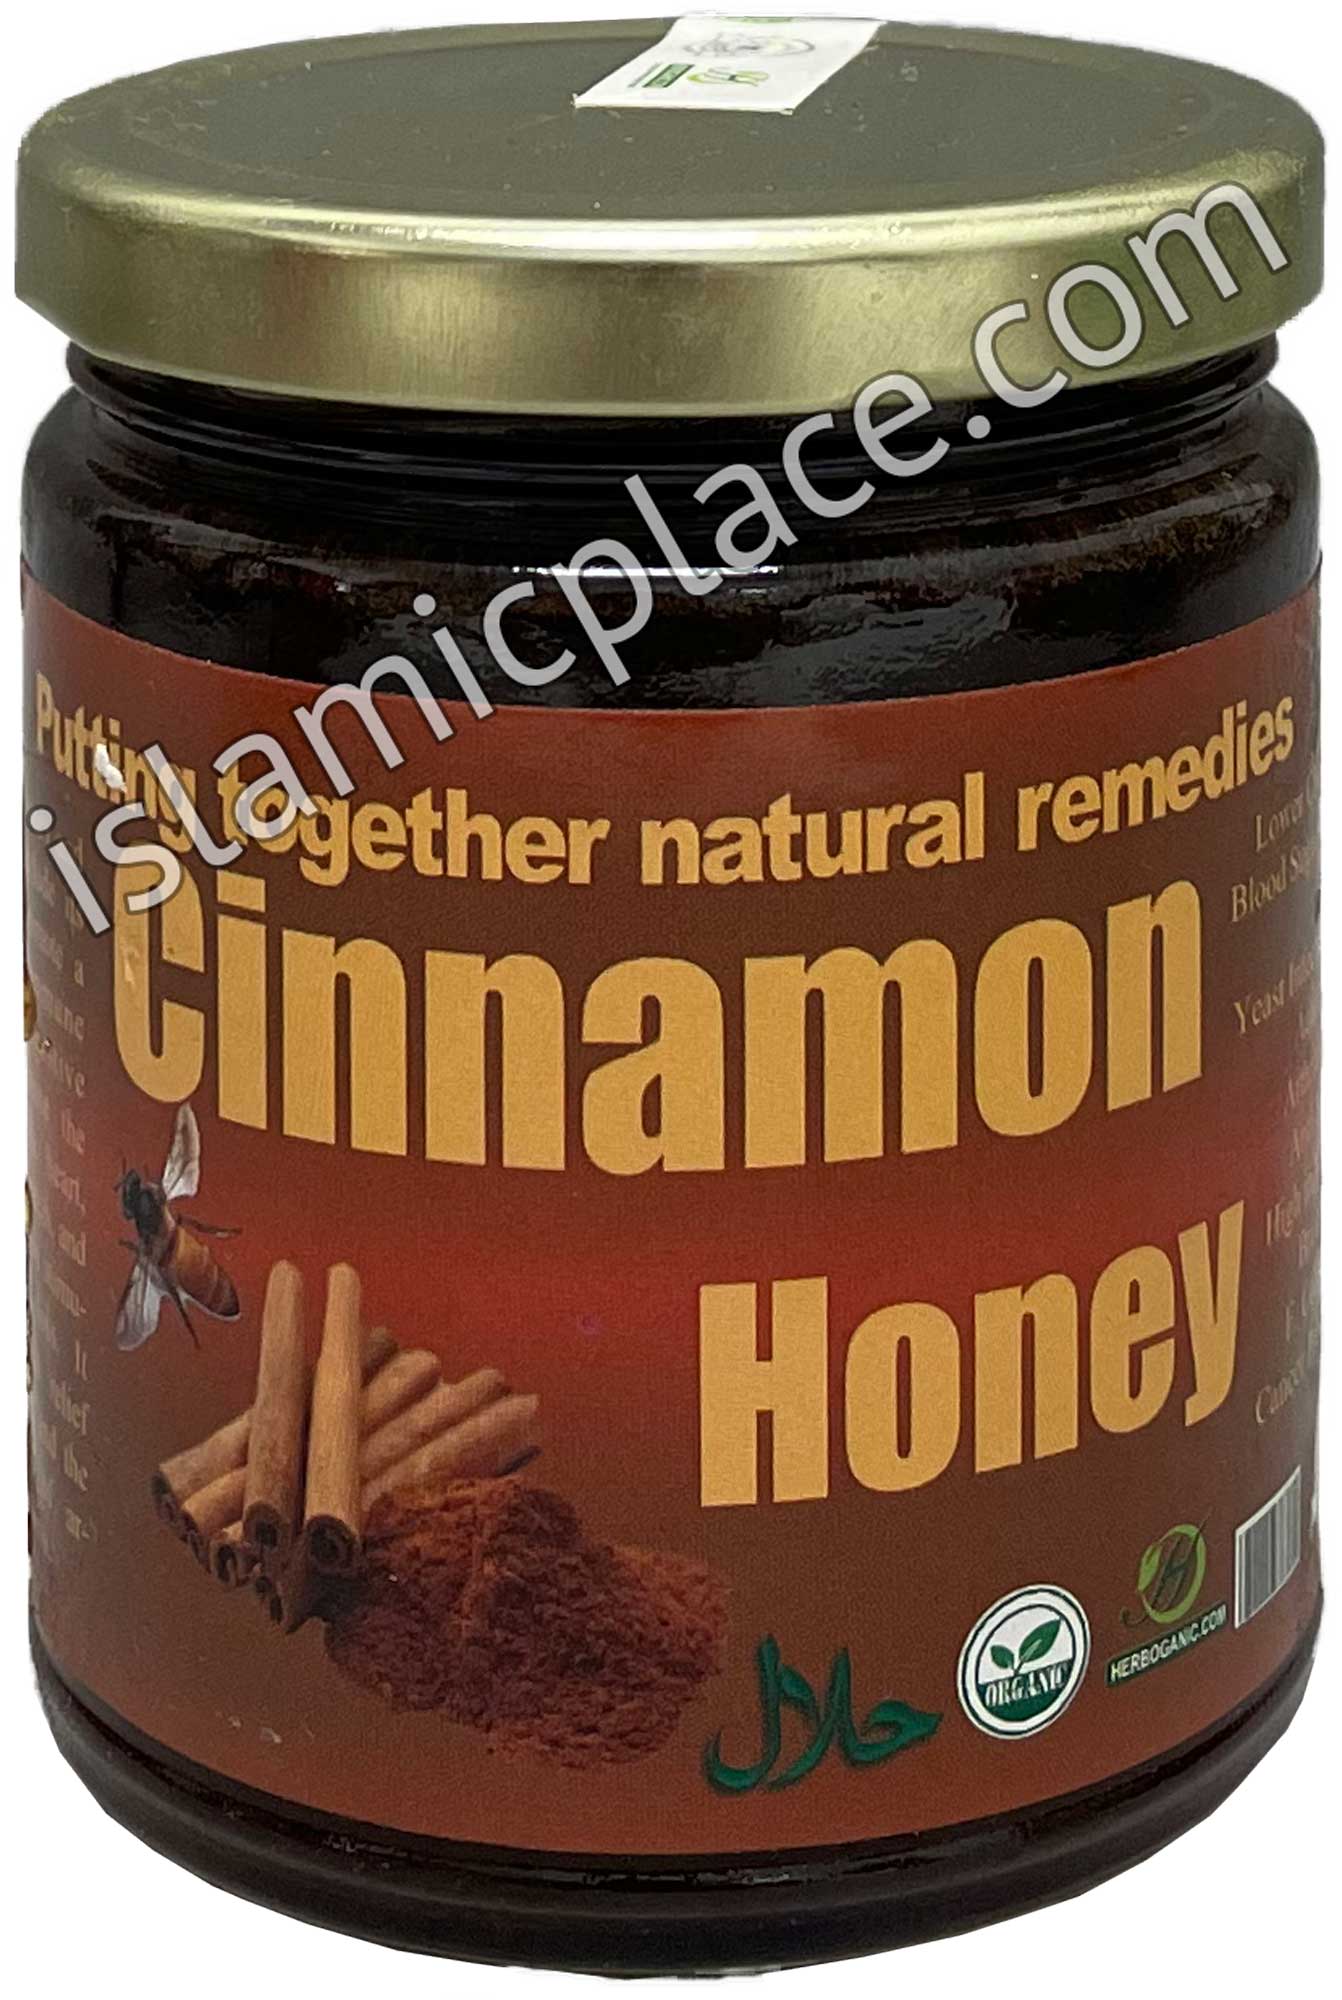 Organic Honey with Cinnamon